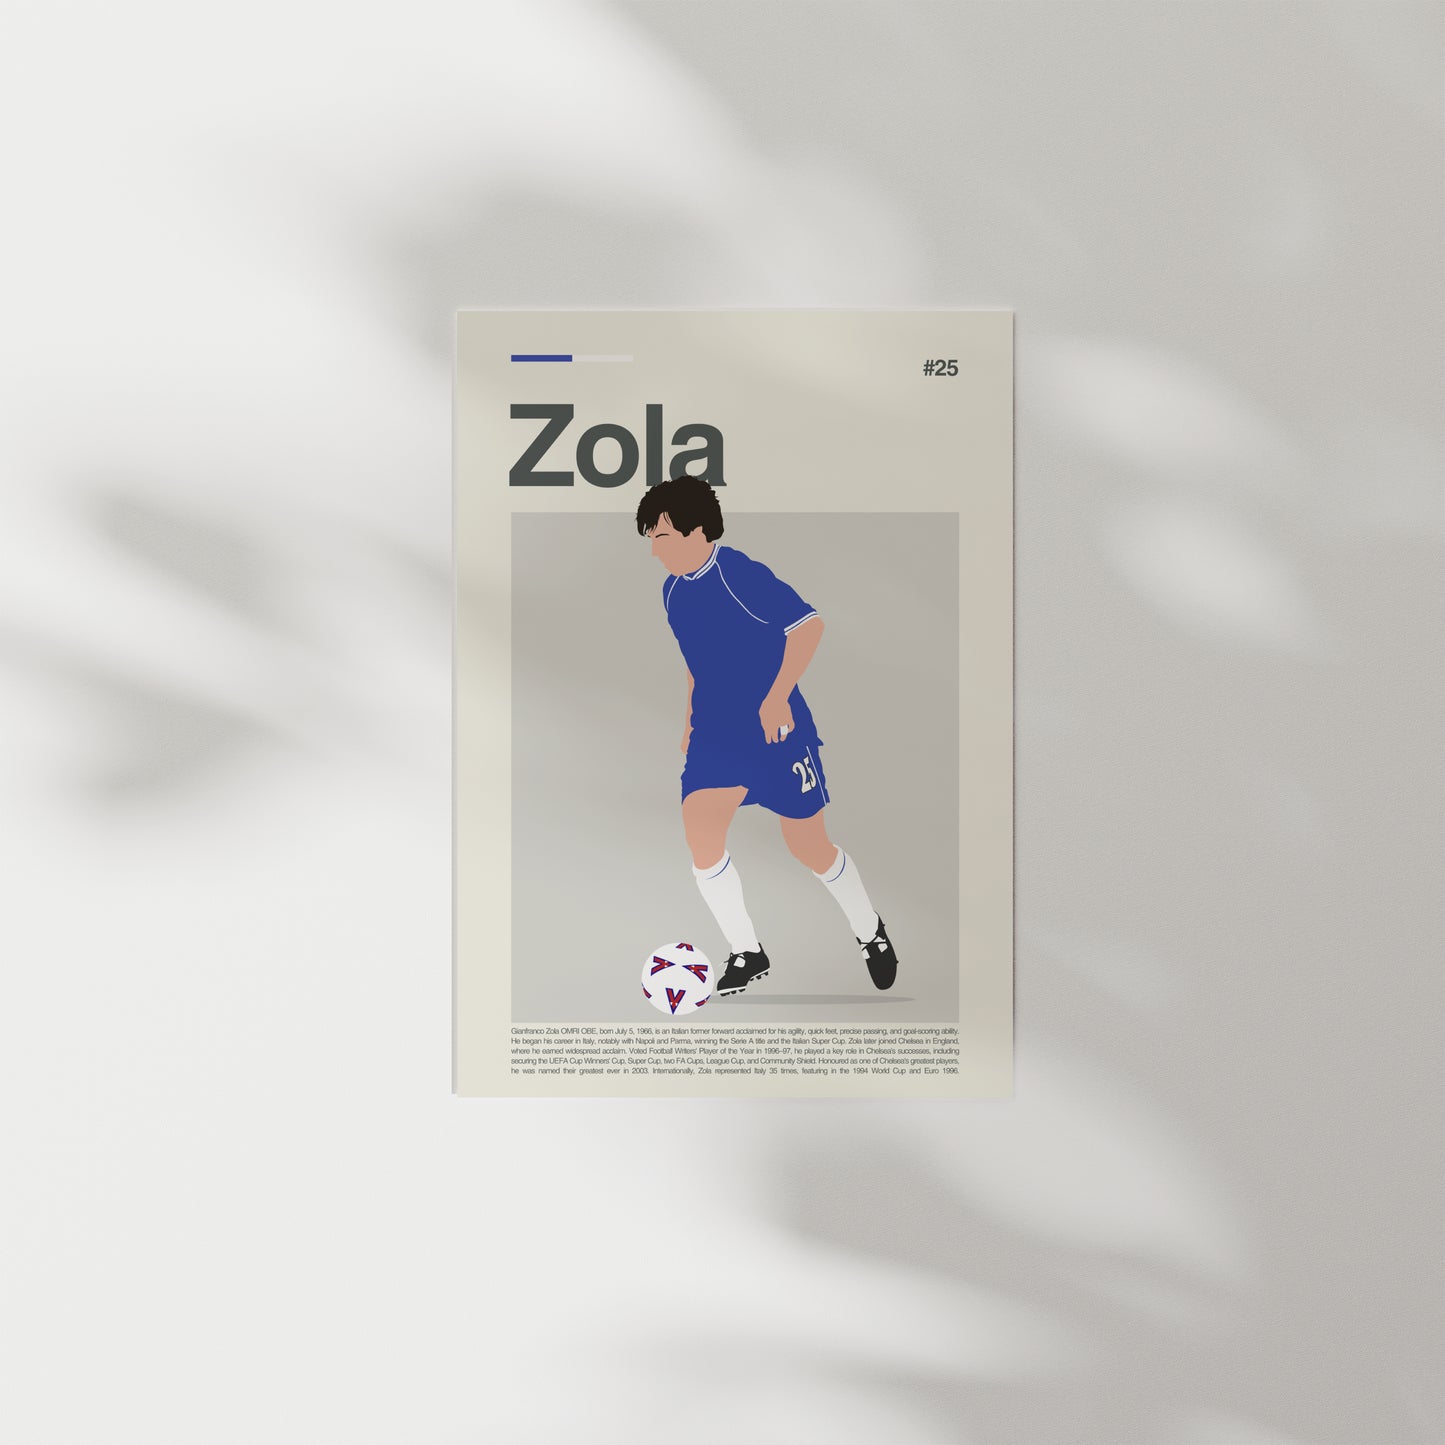 Gianfranco Zola Chelsea Print